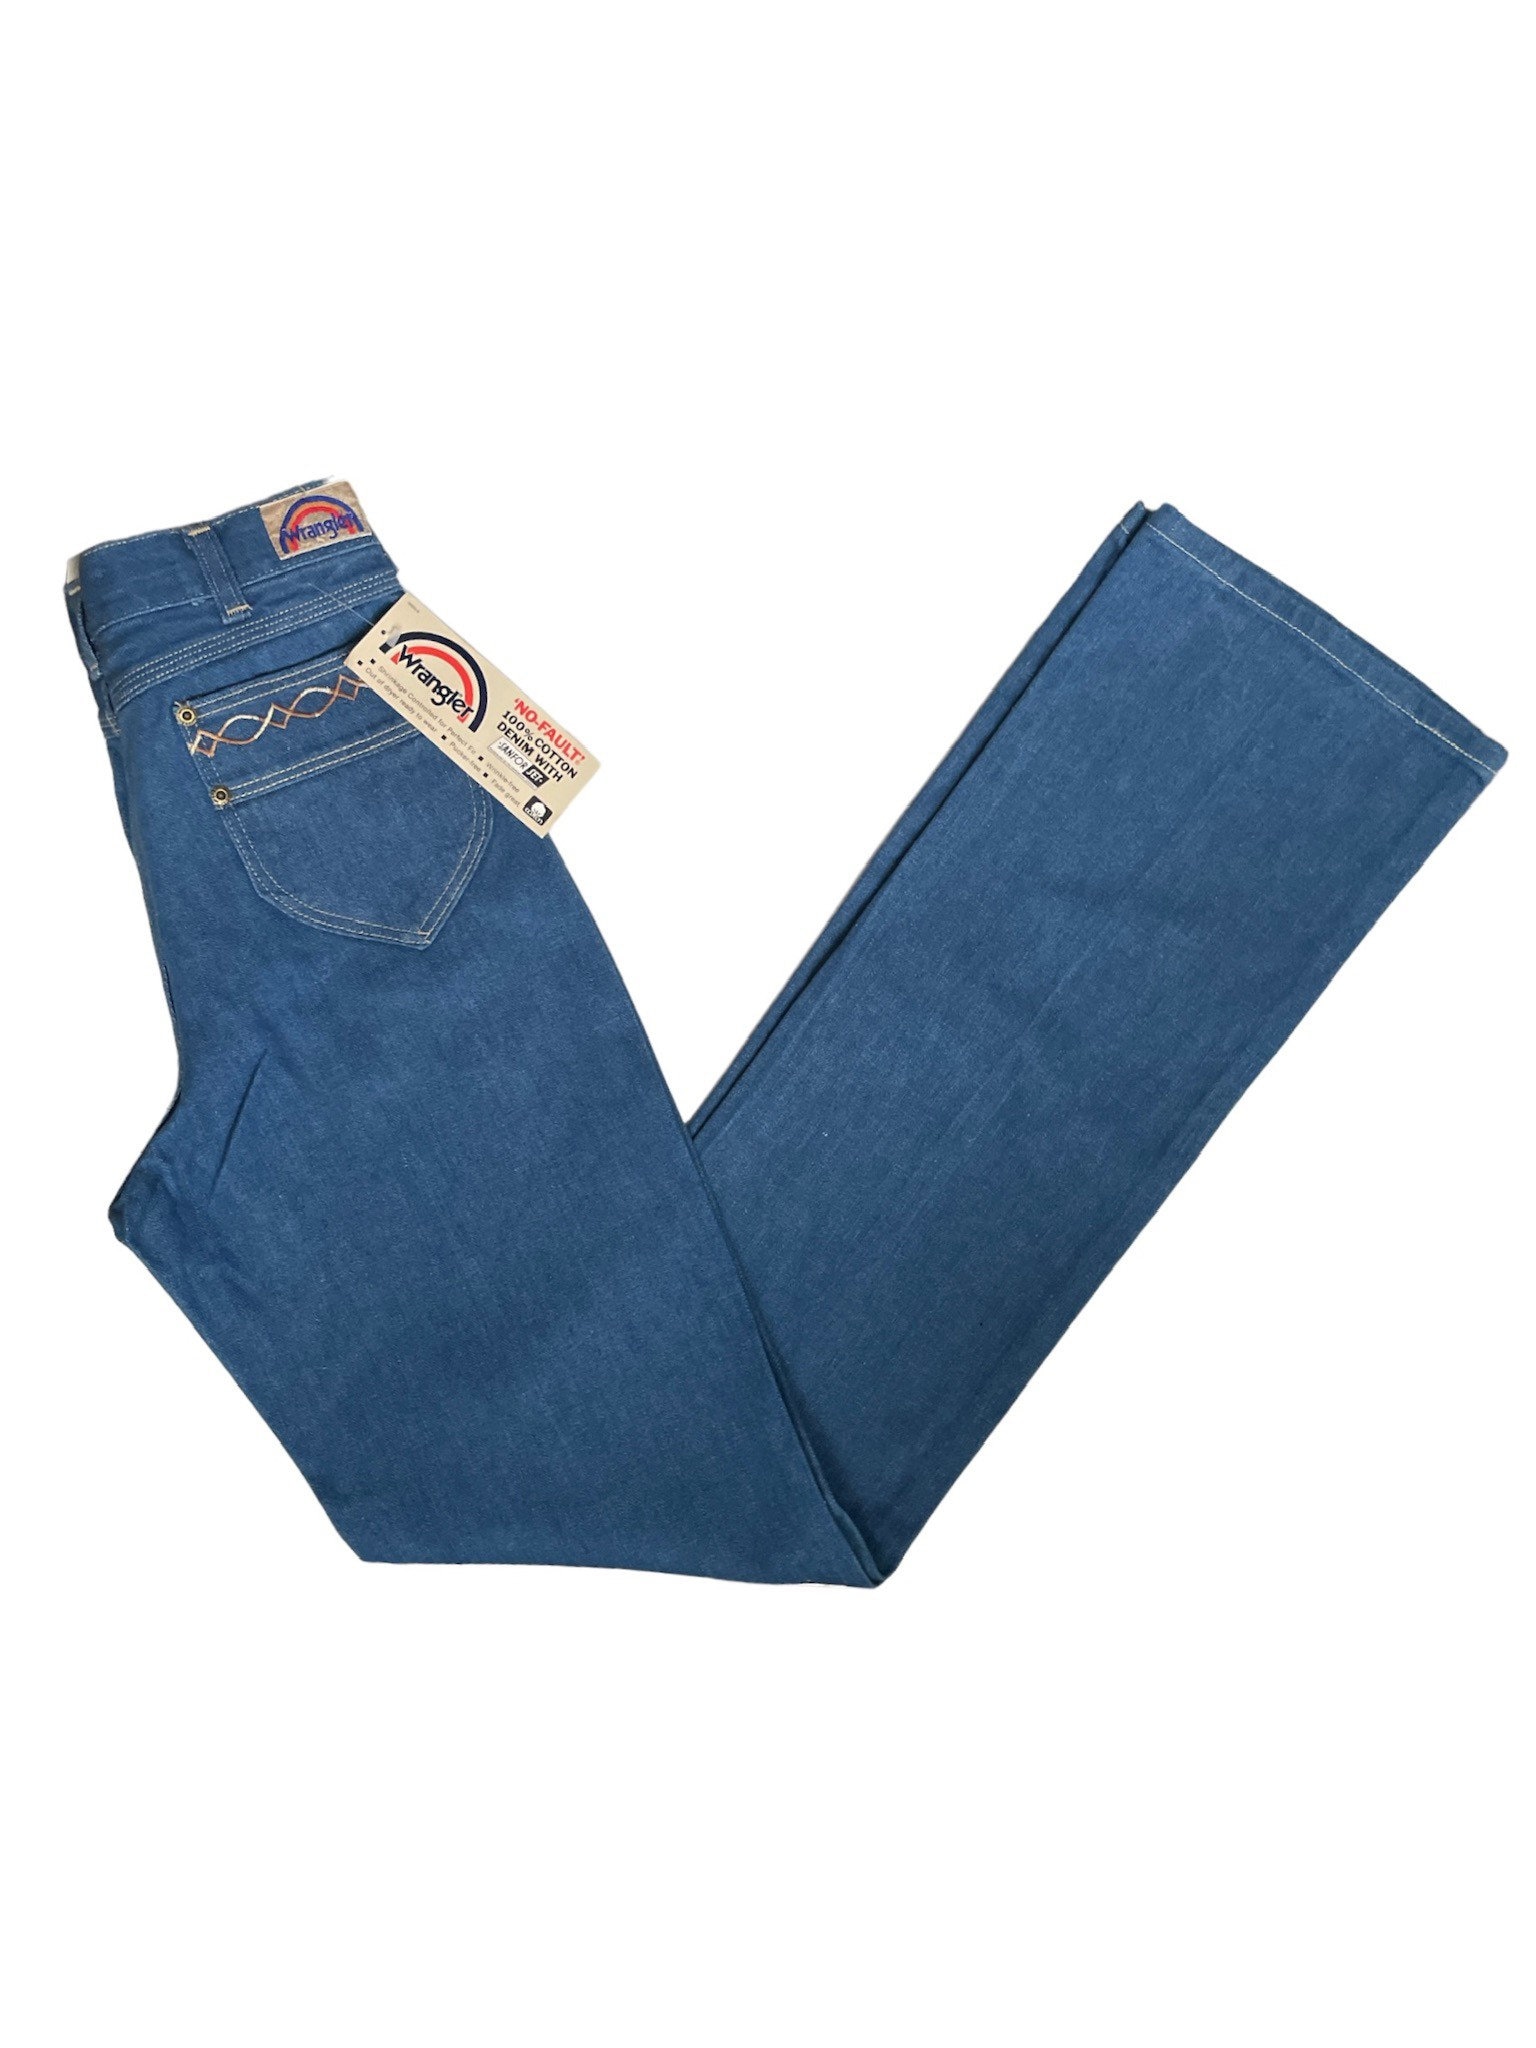 Vintage Wrangler Bandolero Straight Leg Jeans Size 30x36 - Etsy